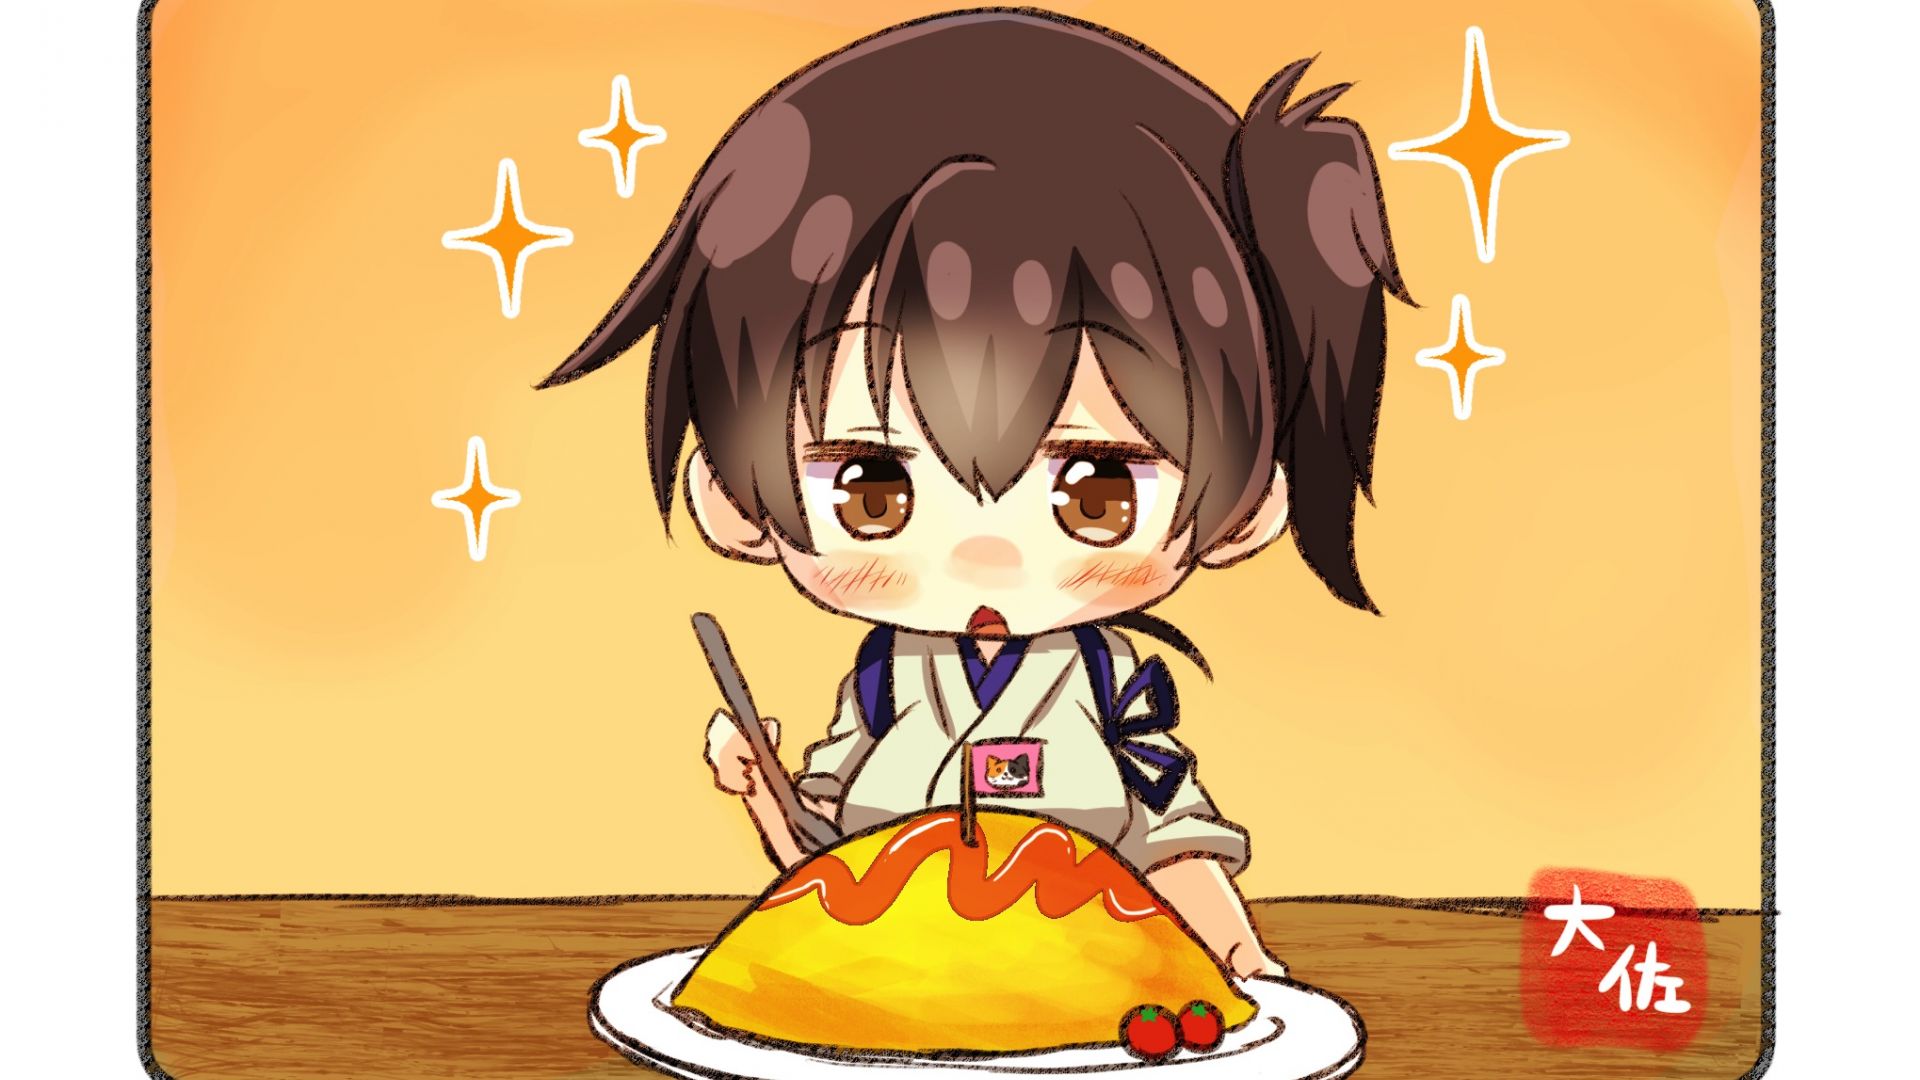 Desktop Wallpaper Kantai, Anime Girl, Eating Food, Hd Image, Picture,  Background, 2bb558